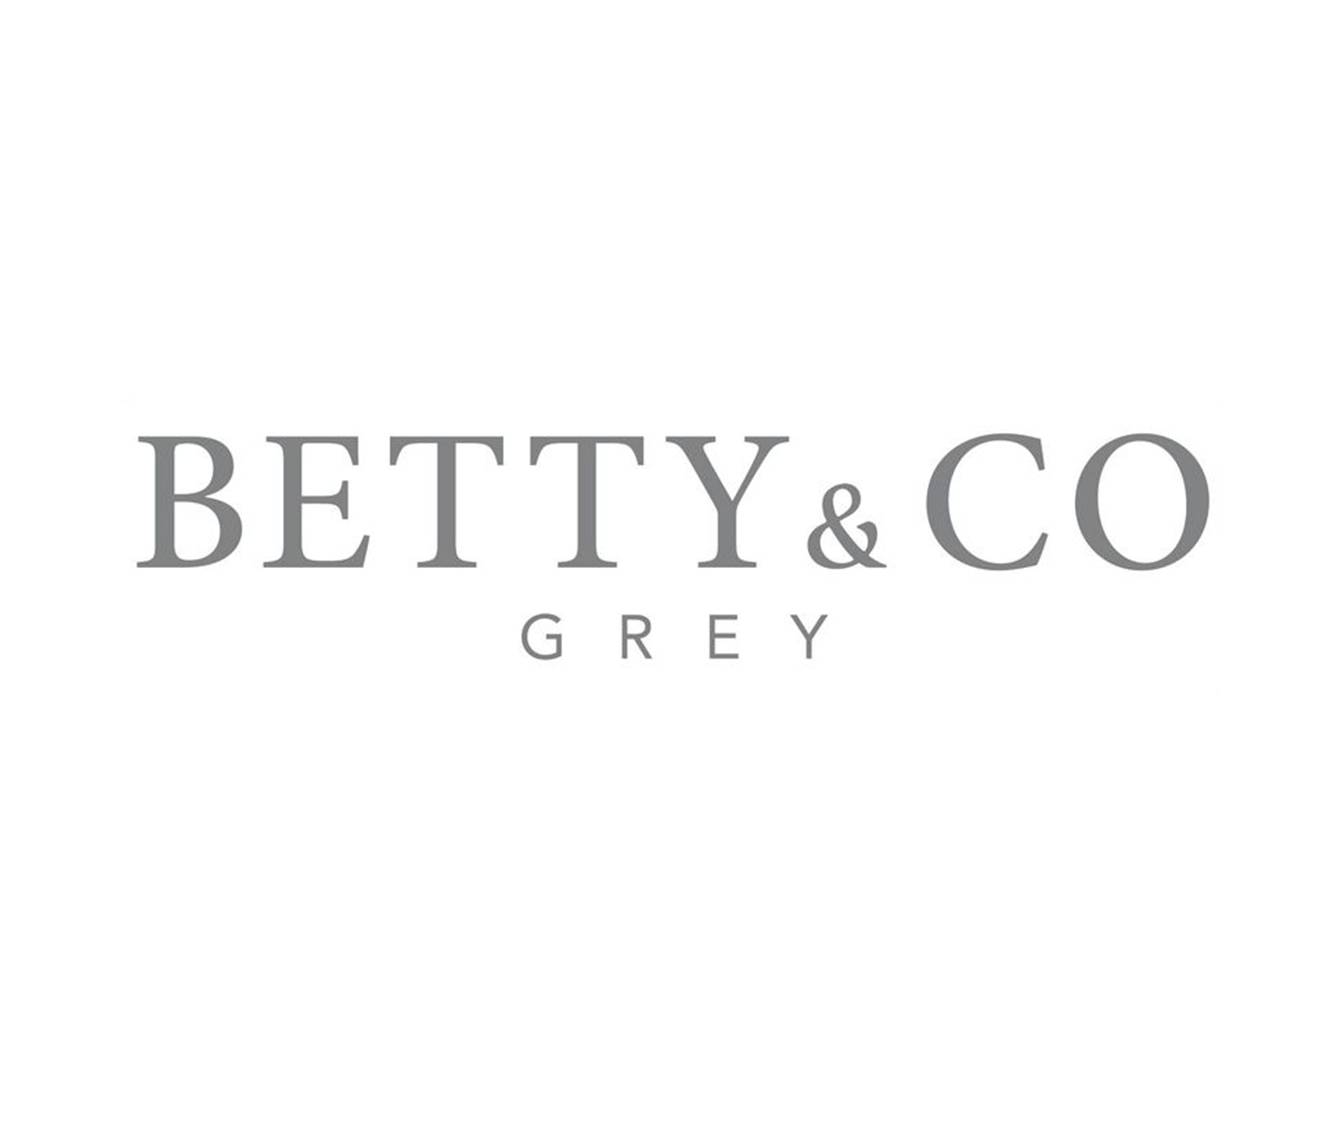 Betty & Co Grey